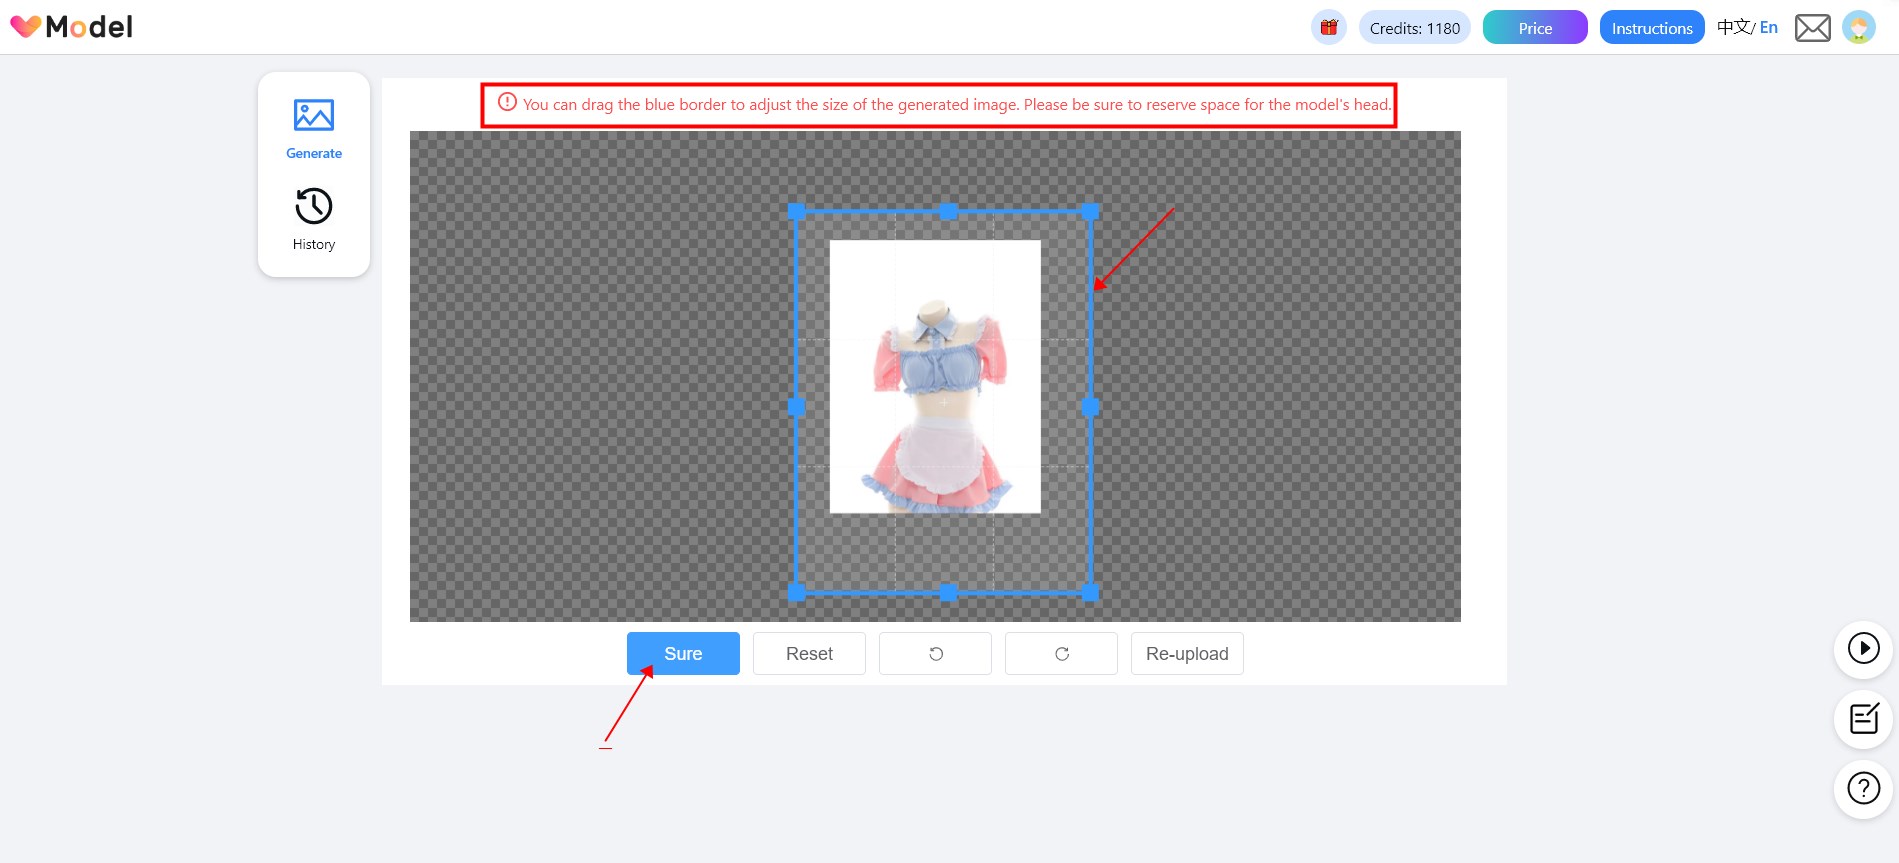 VModel AI fashion models generator-adjust image size